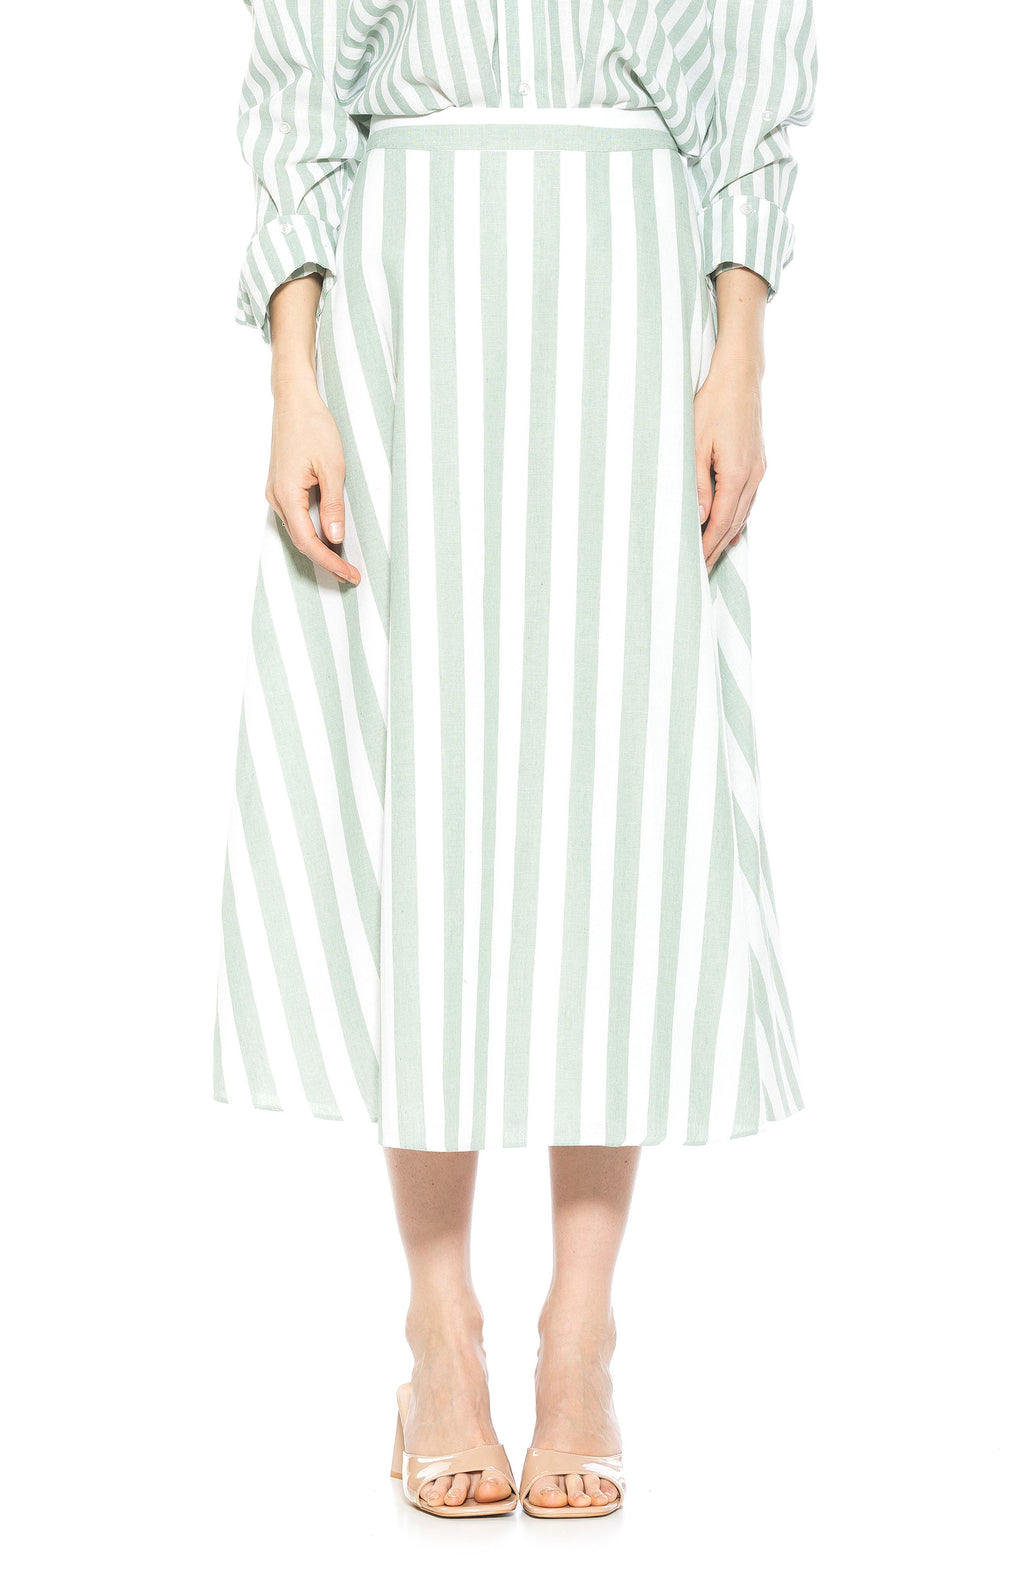 Alexia Admor Brilyn Stripe A-Line Linen Skirt, Main, color, Green Stripe